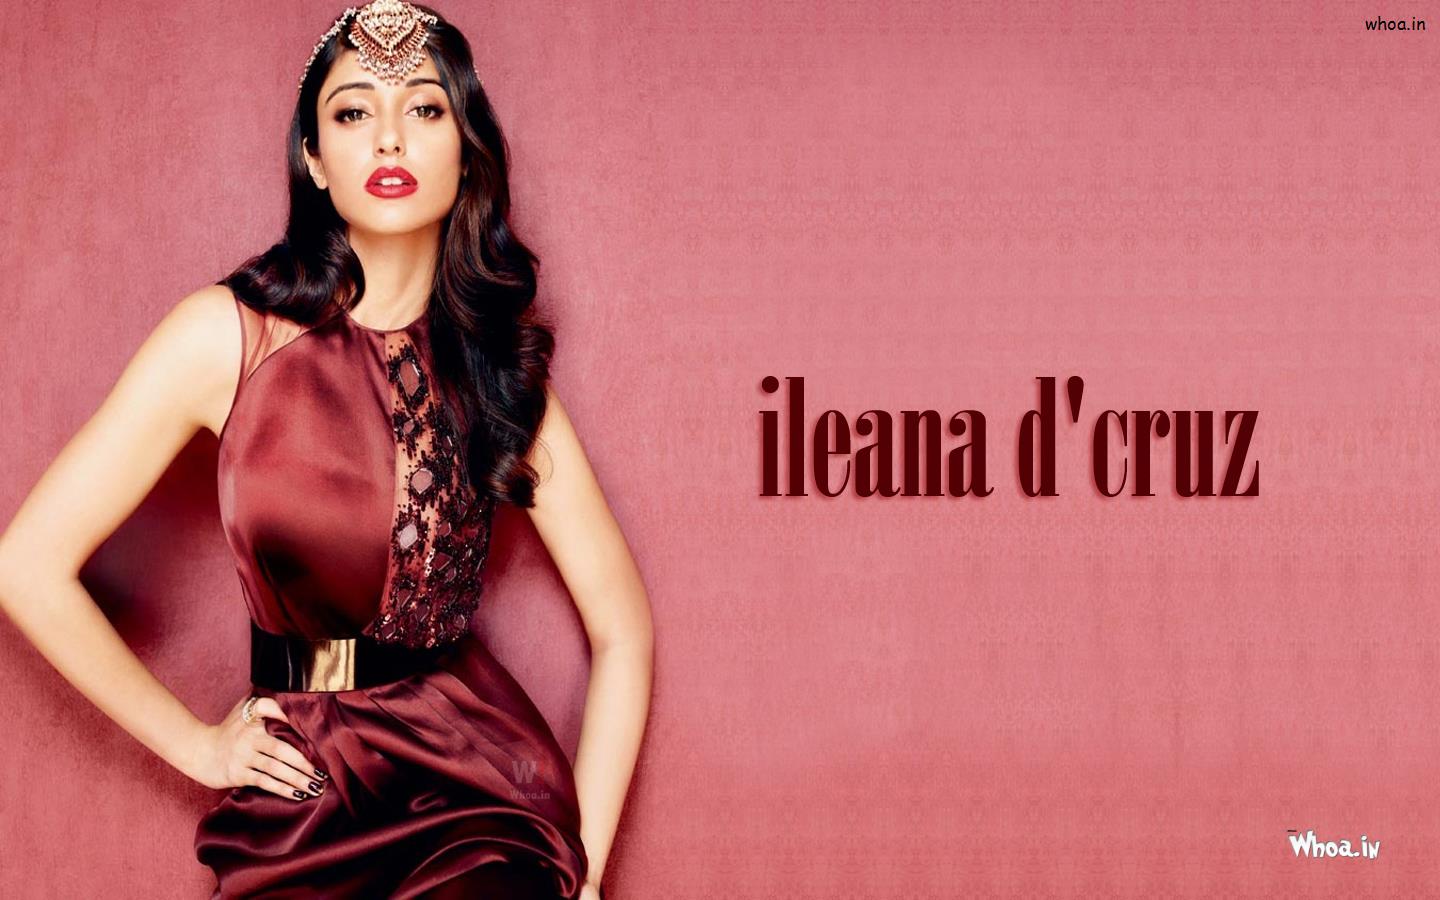 Ileana D'cruz Hot Red Dress And Red Lips Hd Wallpaper